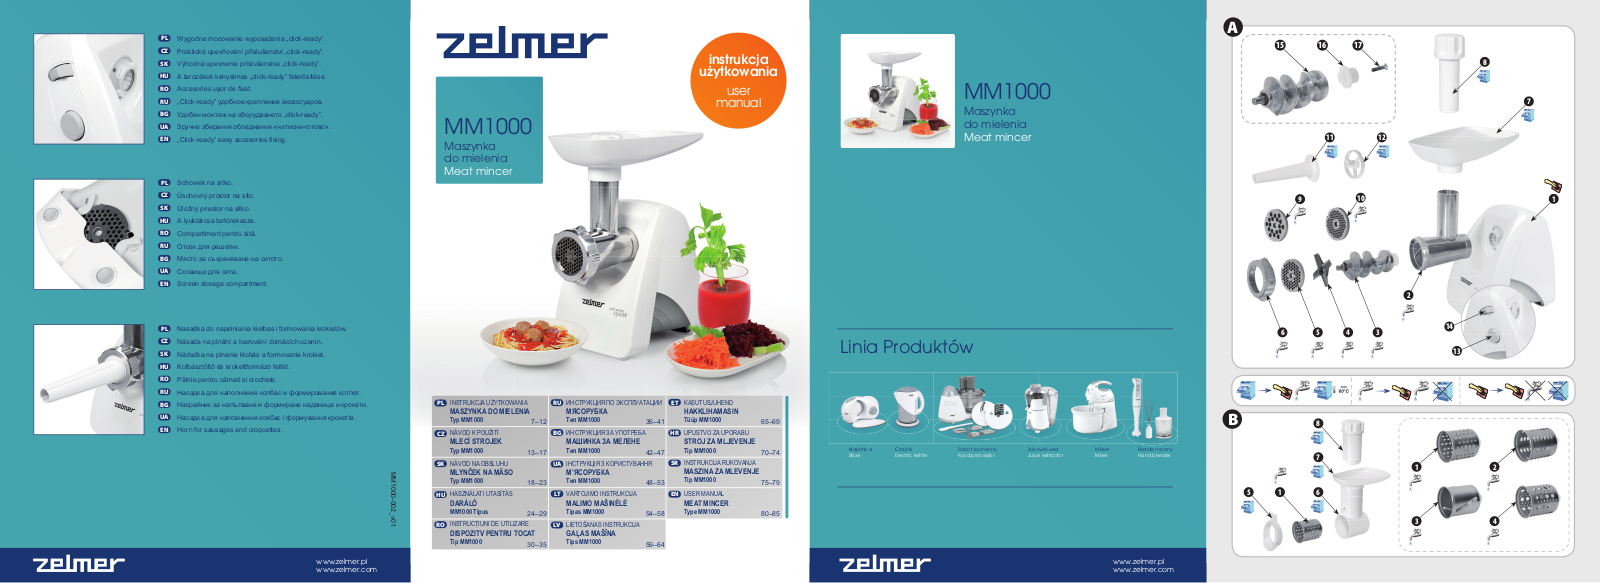 Zelmer MM1000.88, MM1000.82, MM1000.84, MM1000.83, MM1000.80 User Manual